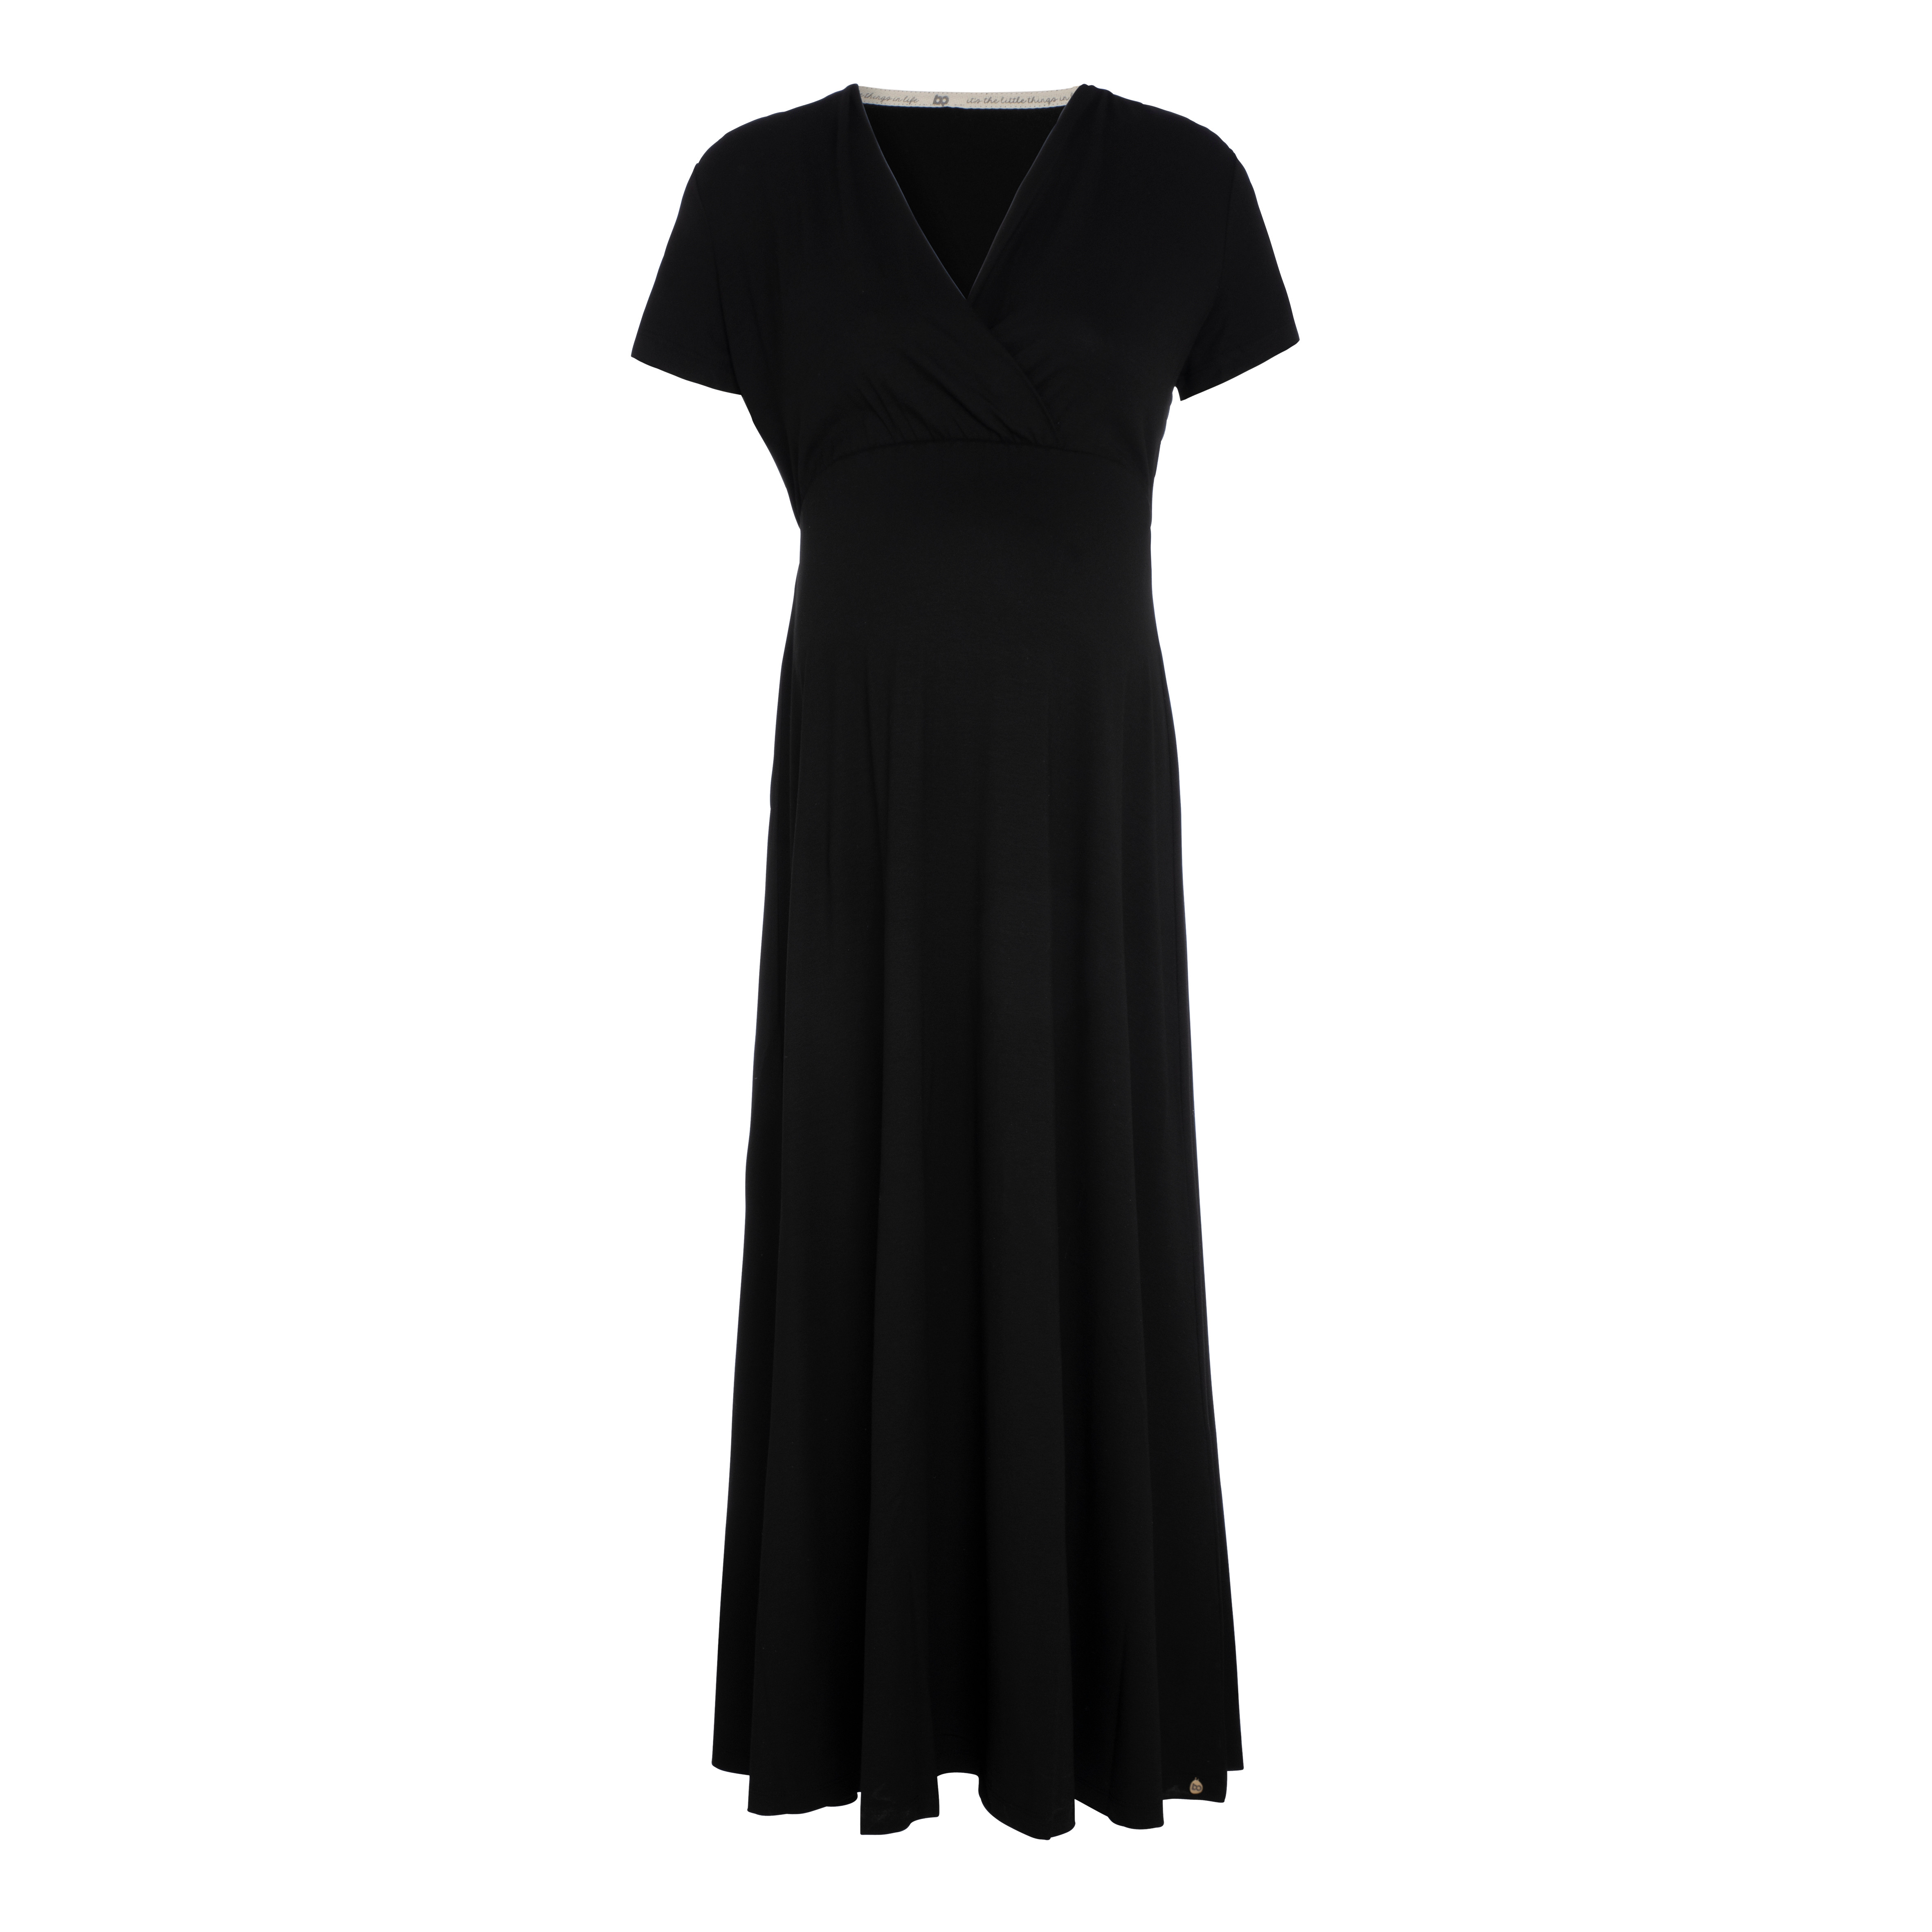 Maternity dress Glow black - L/XL - With nursing function